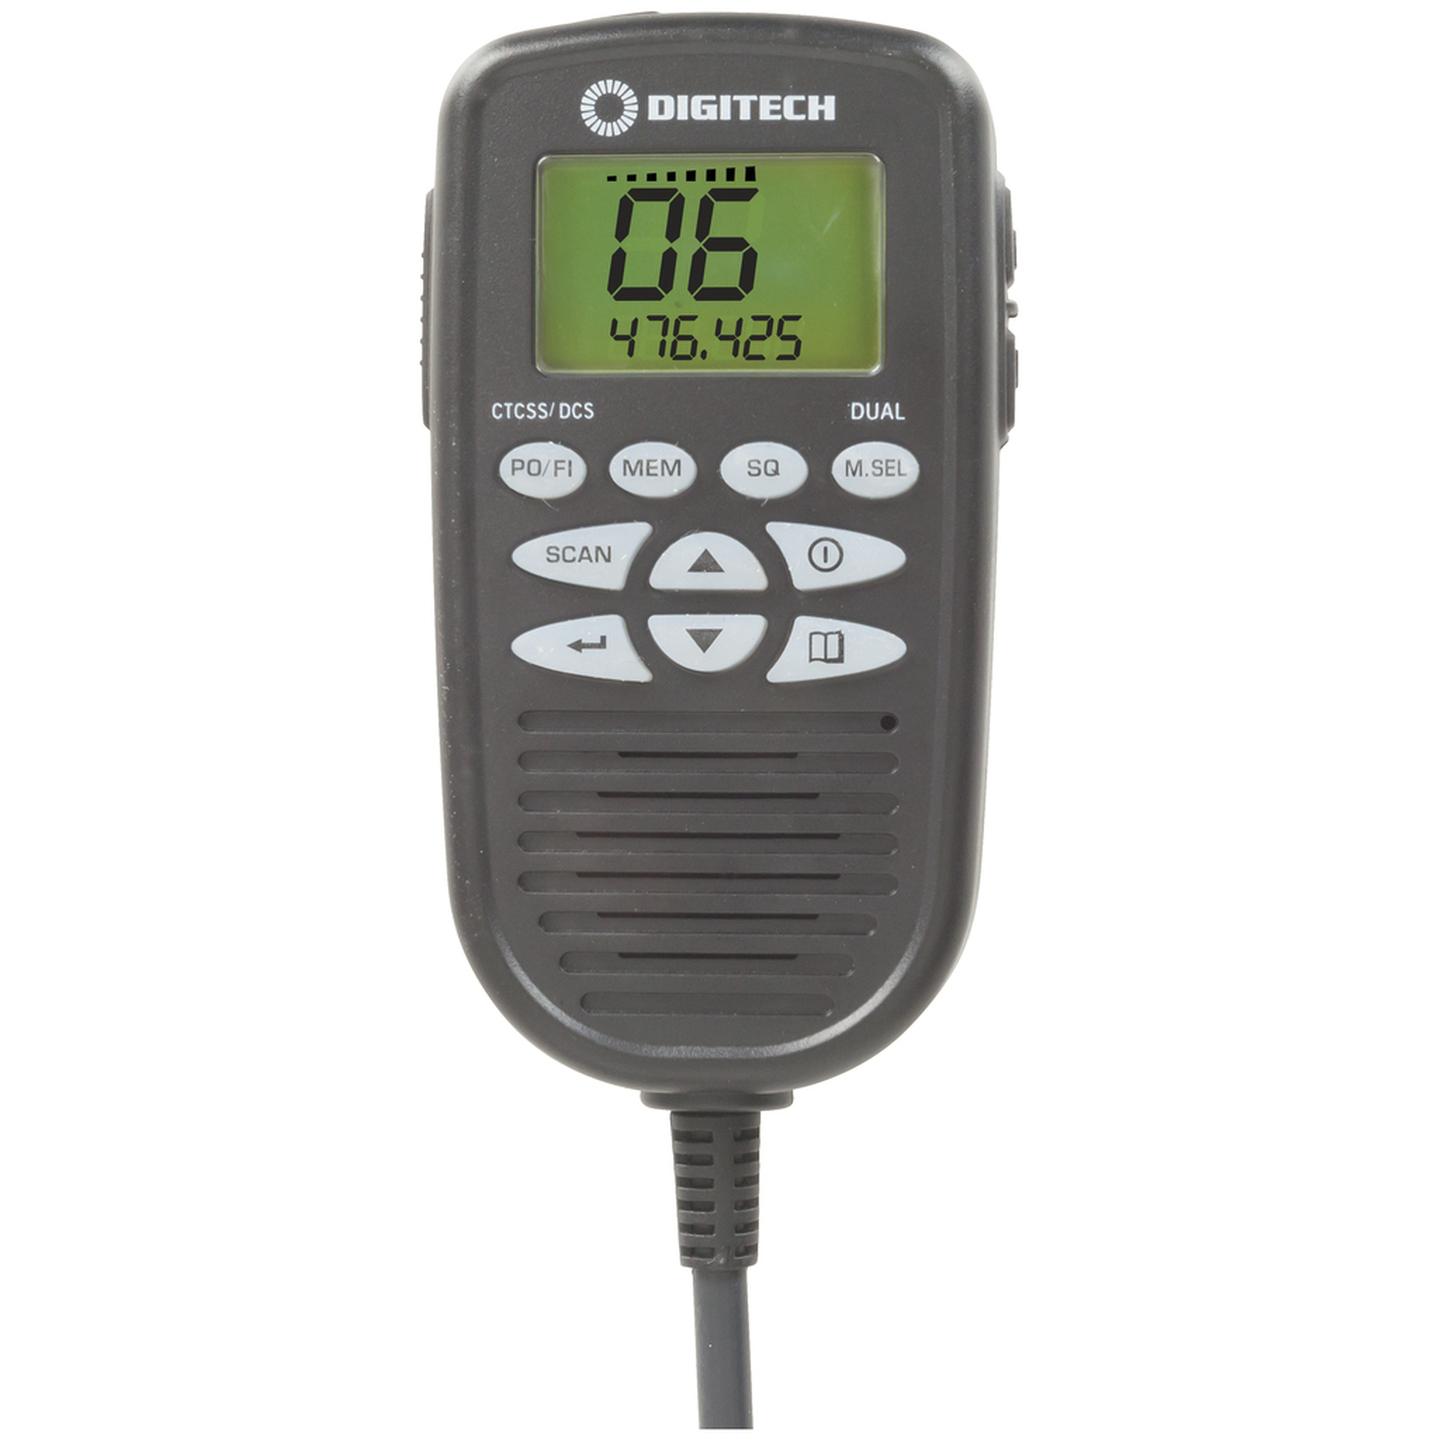 5W UHF CB Radio with Microphone Display and Control